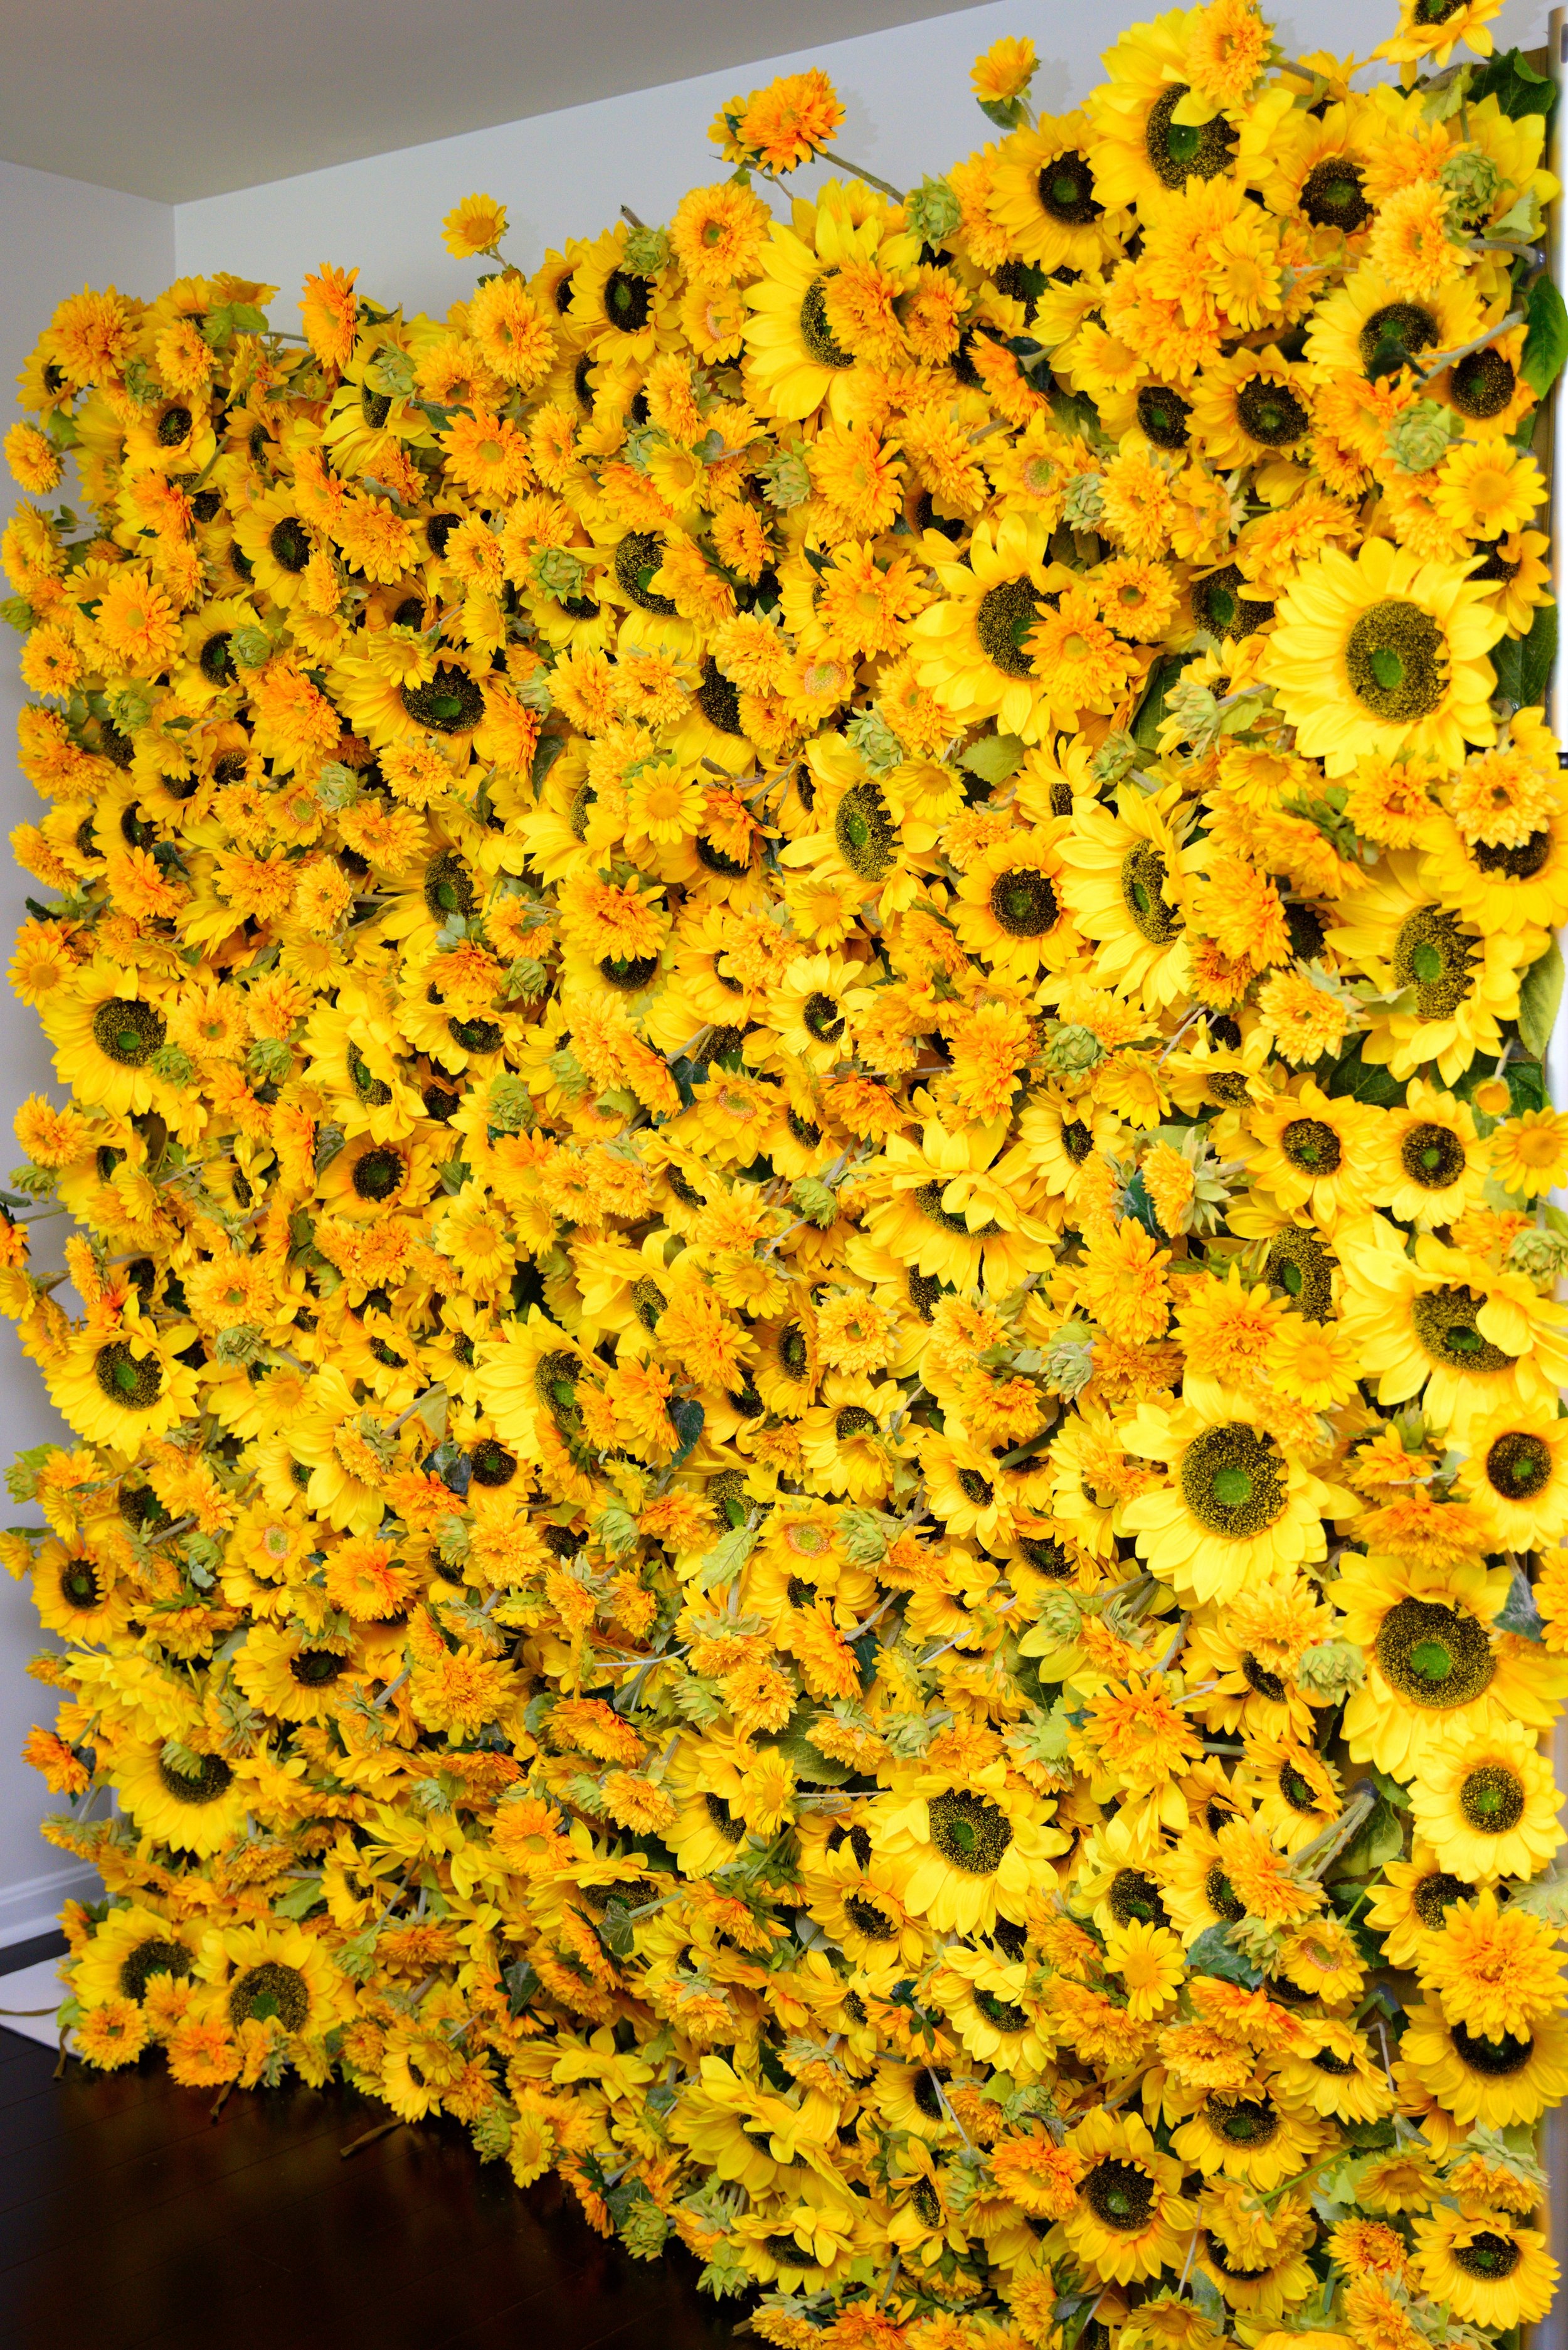 eyeObee+PhotoBooth+DMV+Flower wall+ Sunflower wall+ best+luxury+photobooth++eyeobee+photography+washington+DC+luxury+photobooth2.jpeg